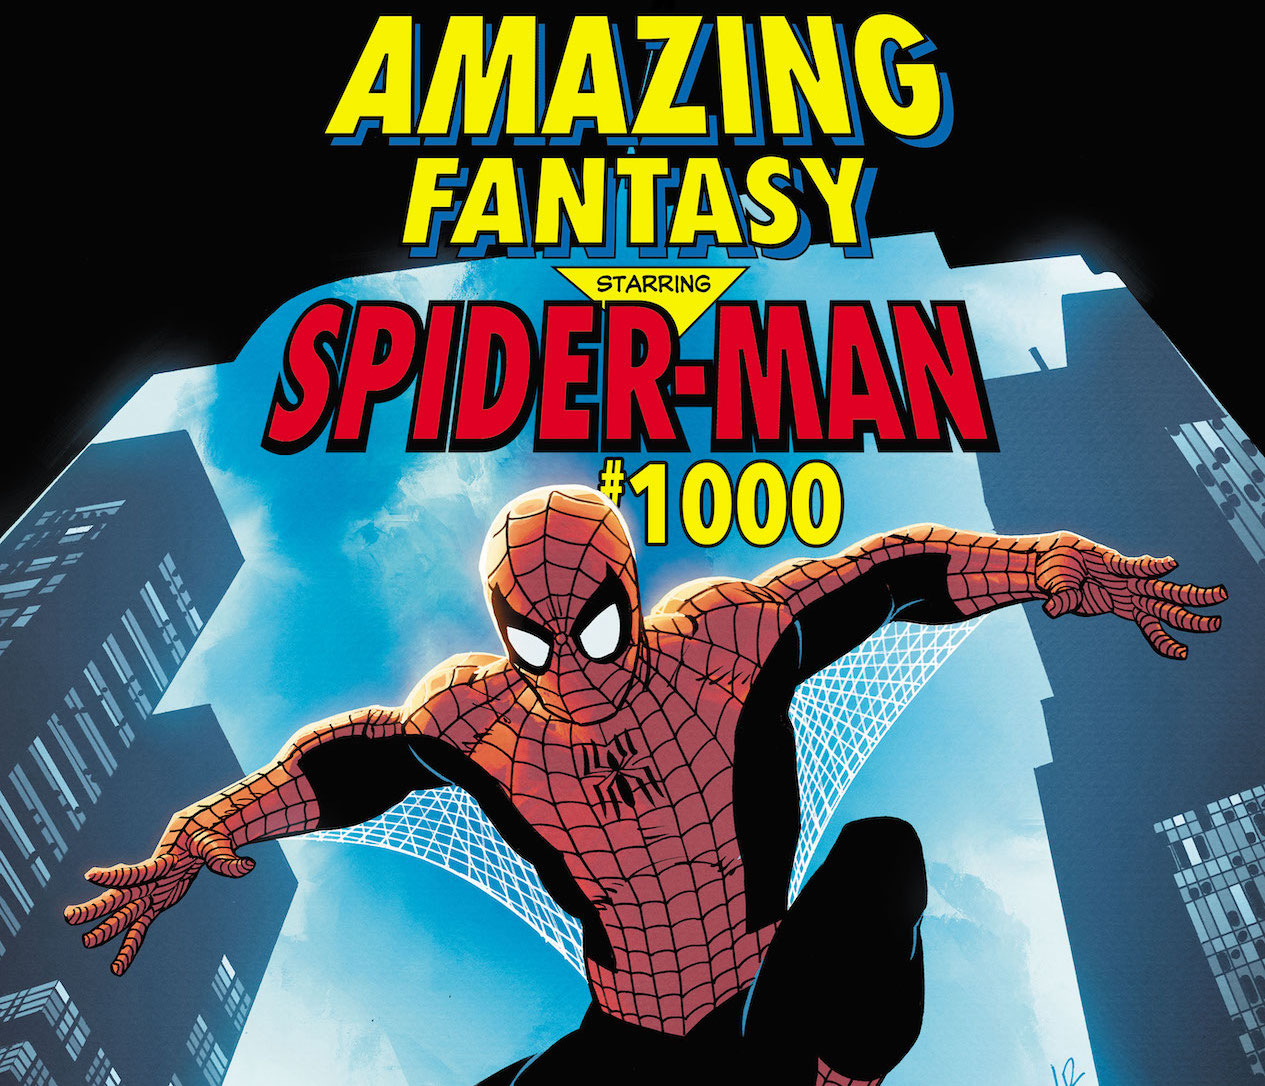 'Amazing Fantasy' #1000 to celebrate Spider-Man's 60th anniversary